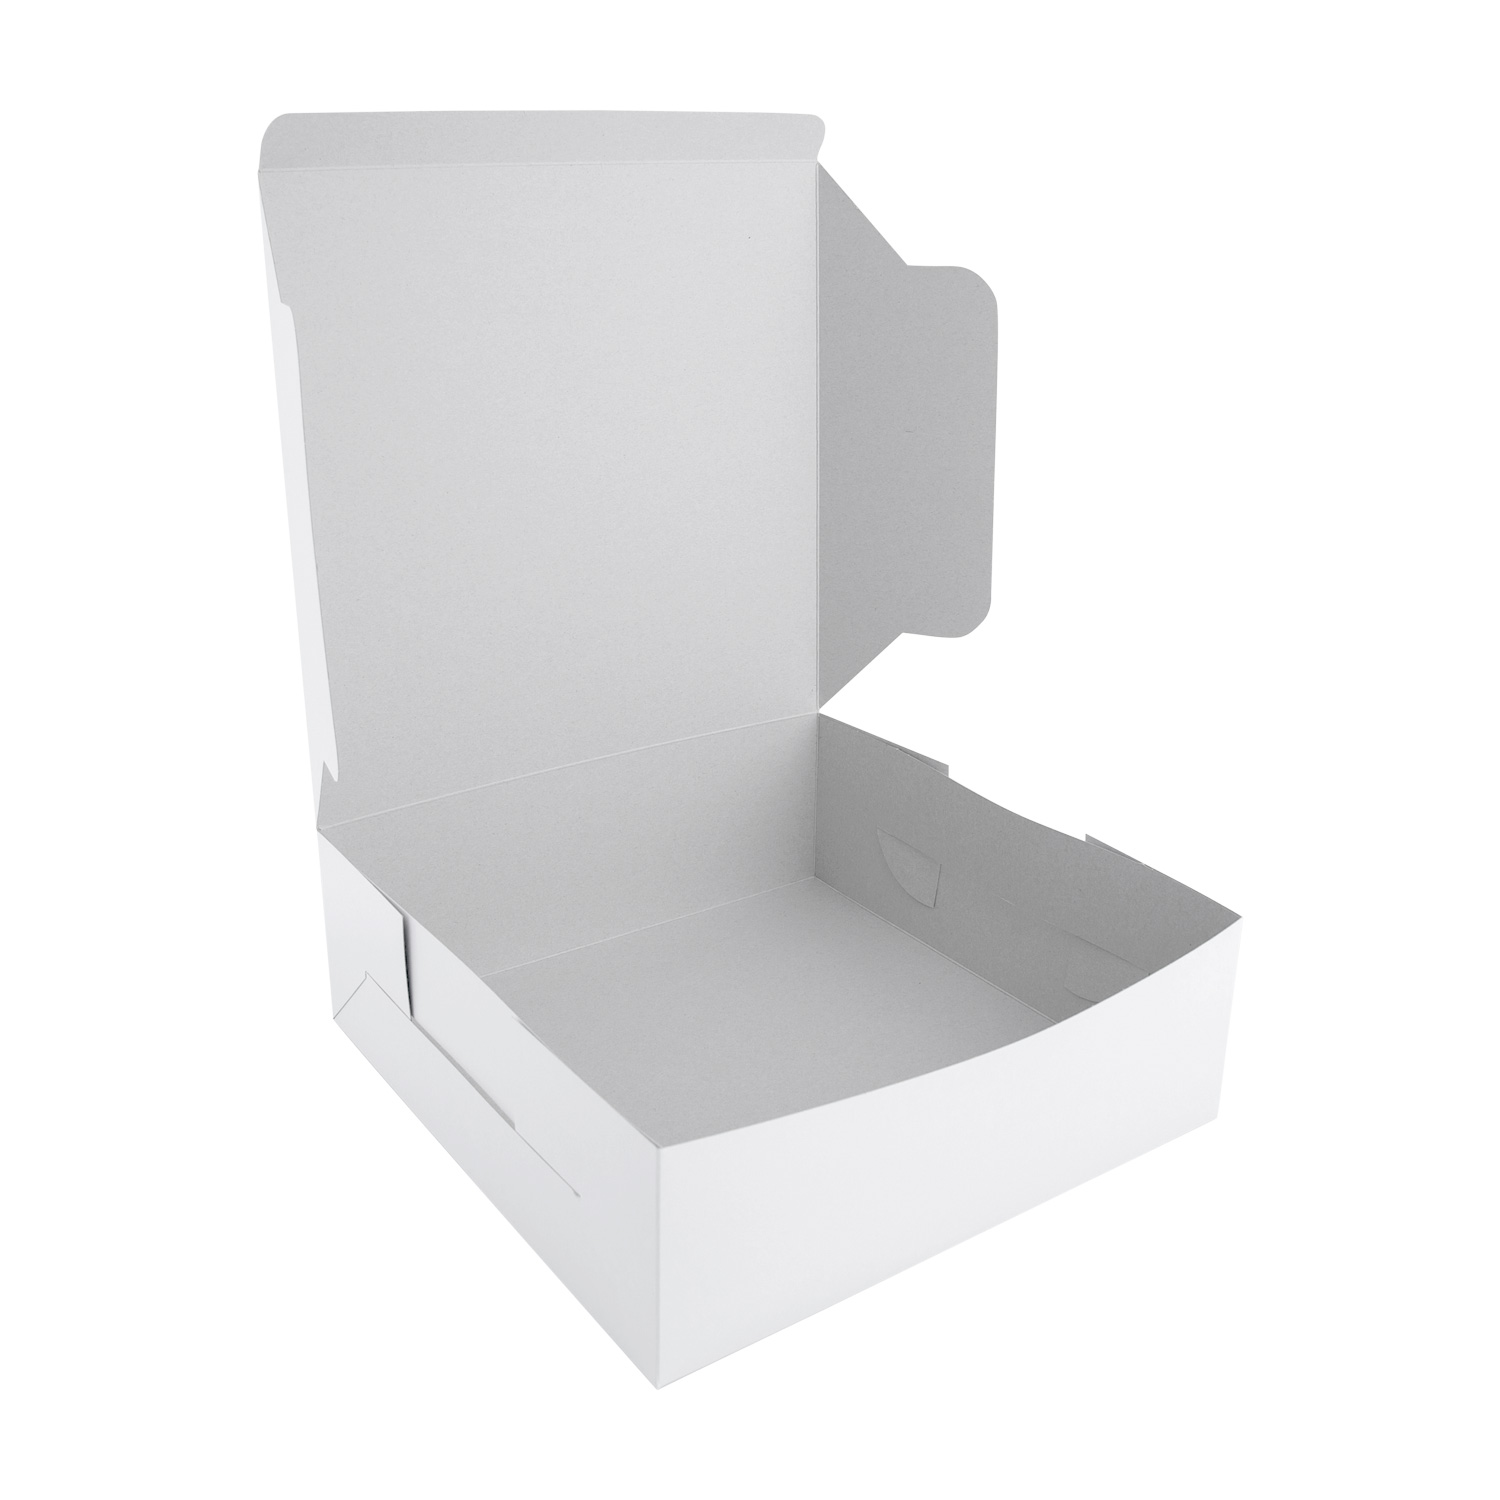 Cake box, White Colour (30cm x 30cm x 12 cm)